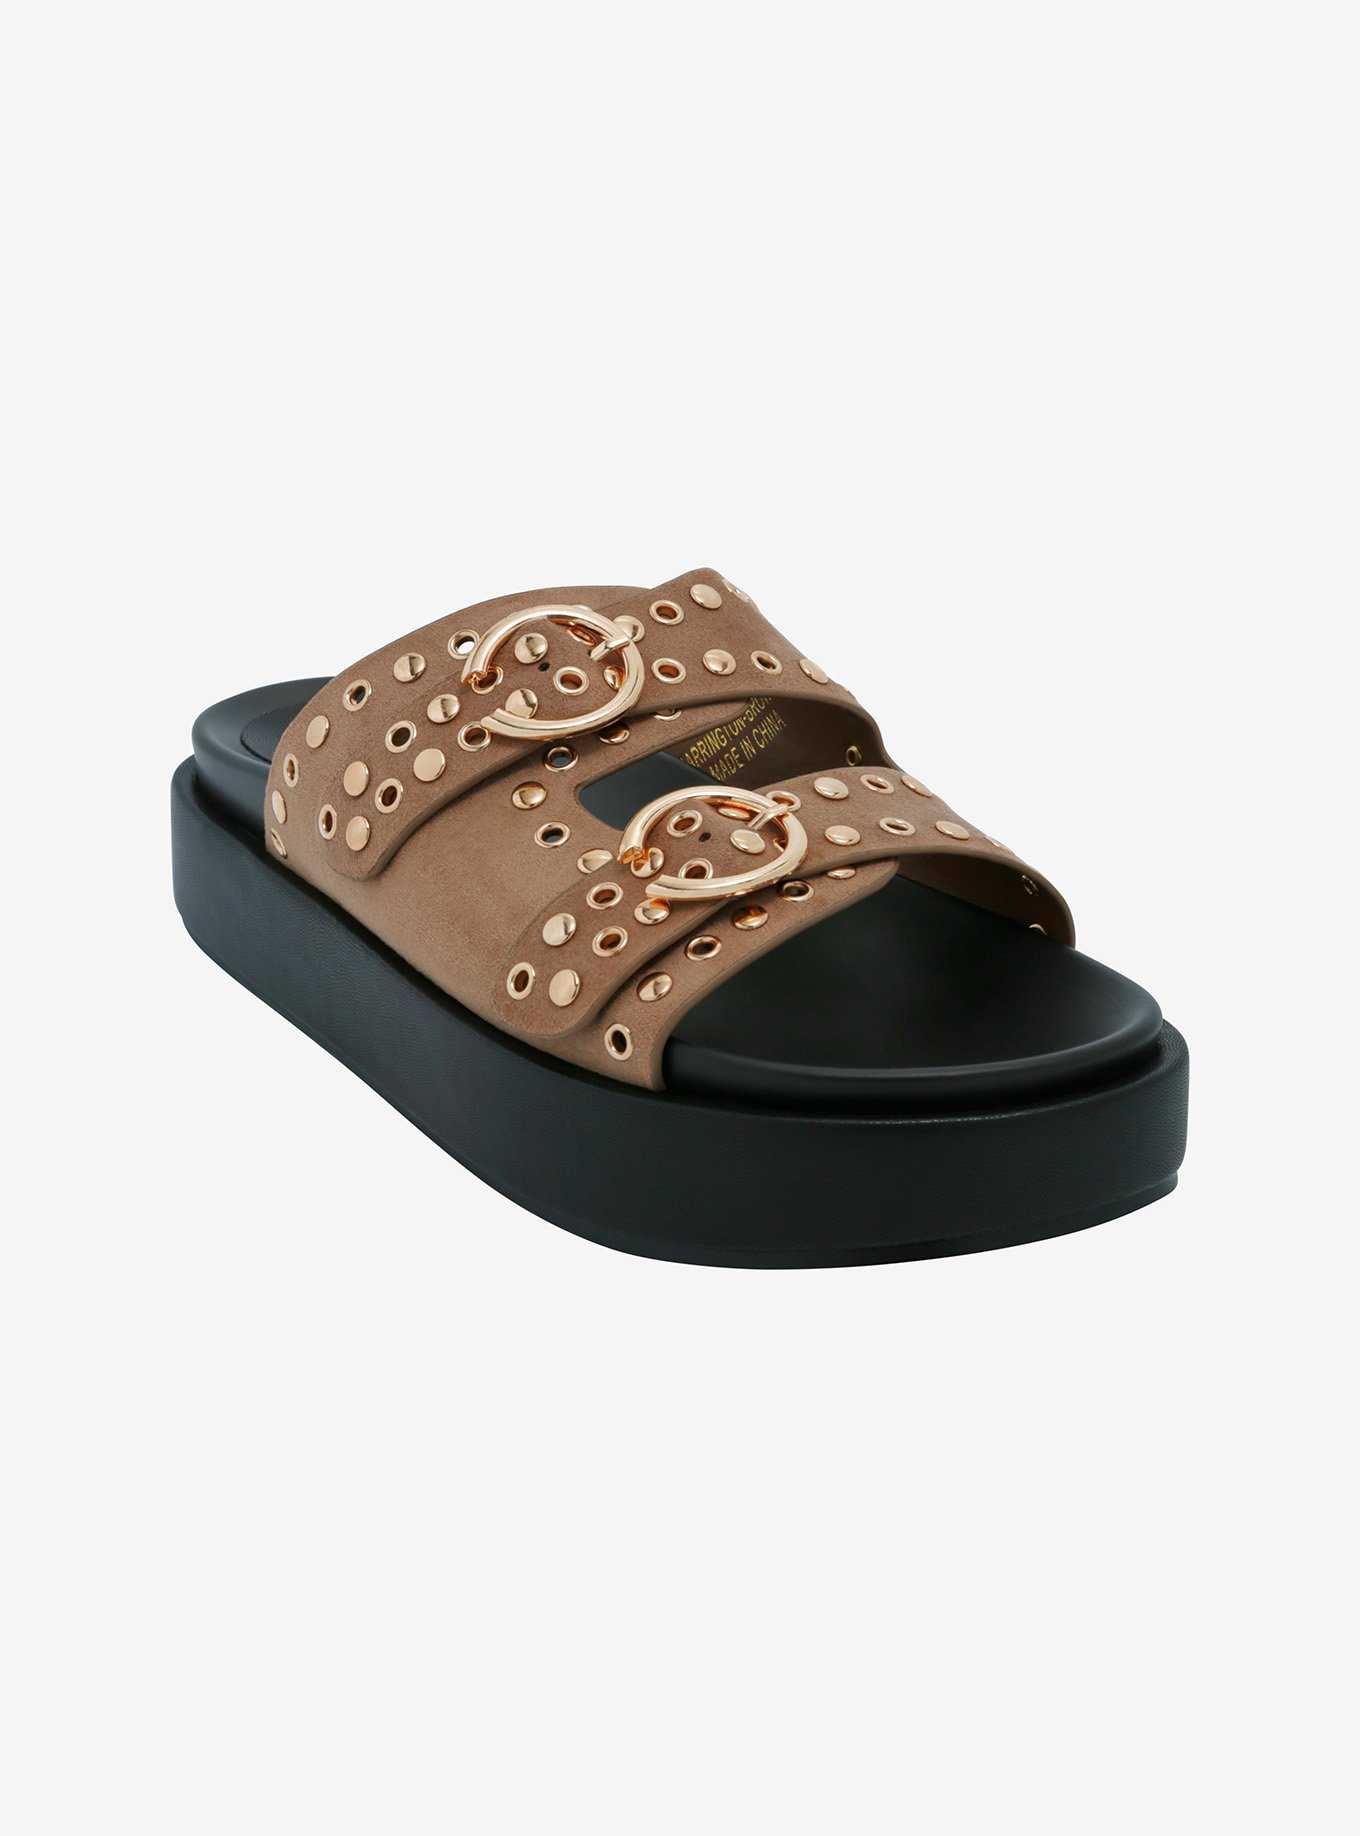 Azalea Wang Tan & Gold Grommet Platform Buckle Sandals, , hi-res